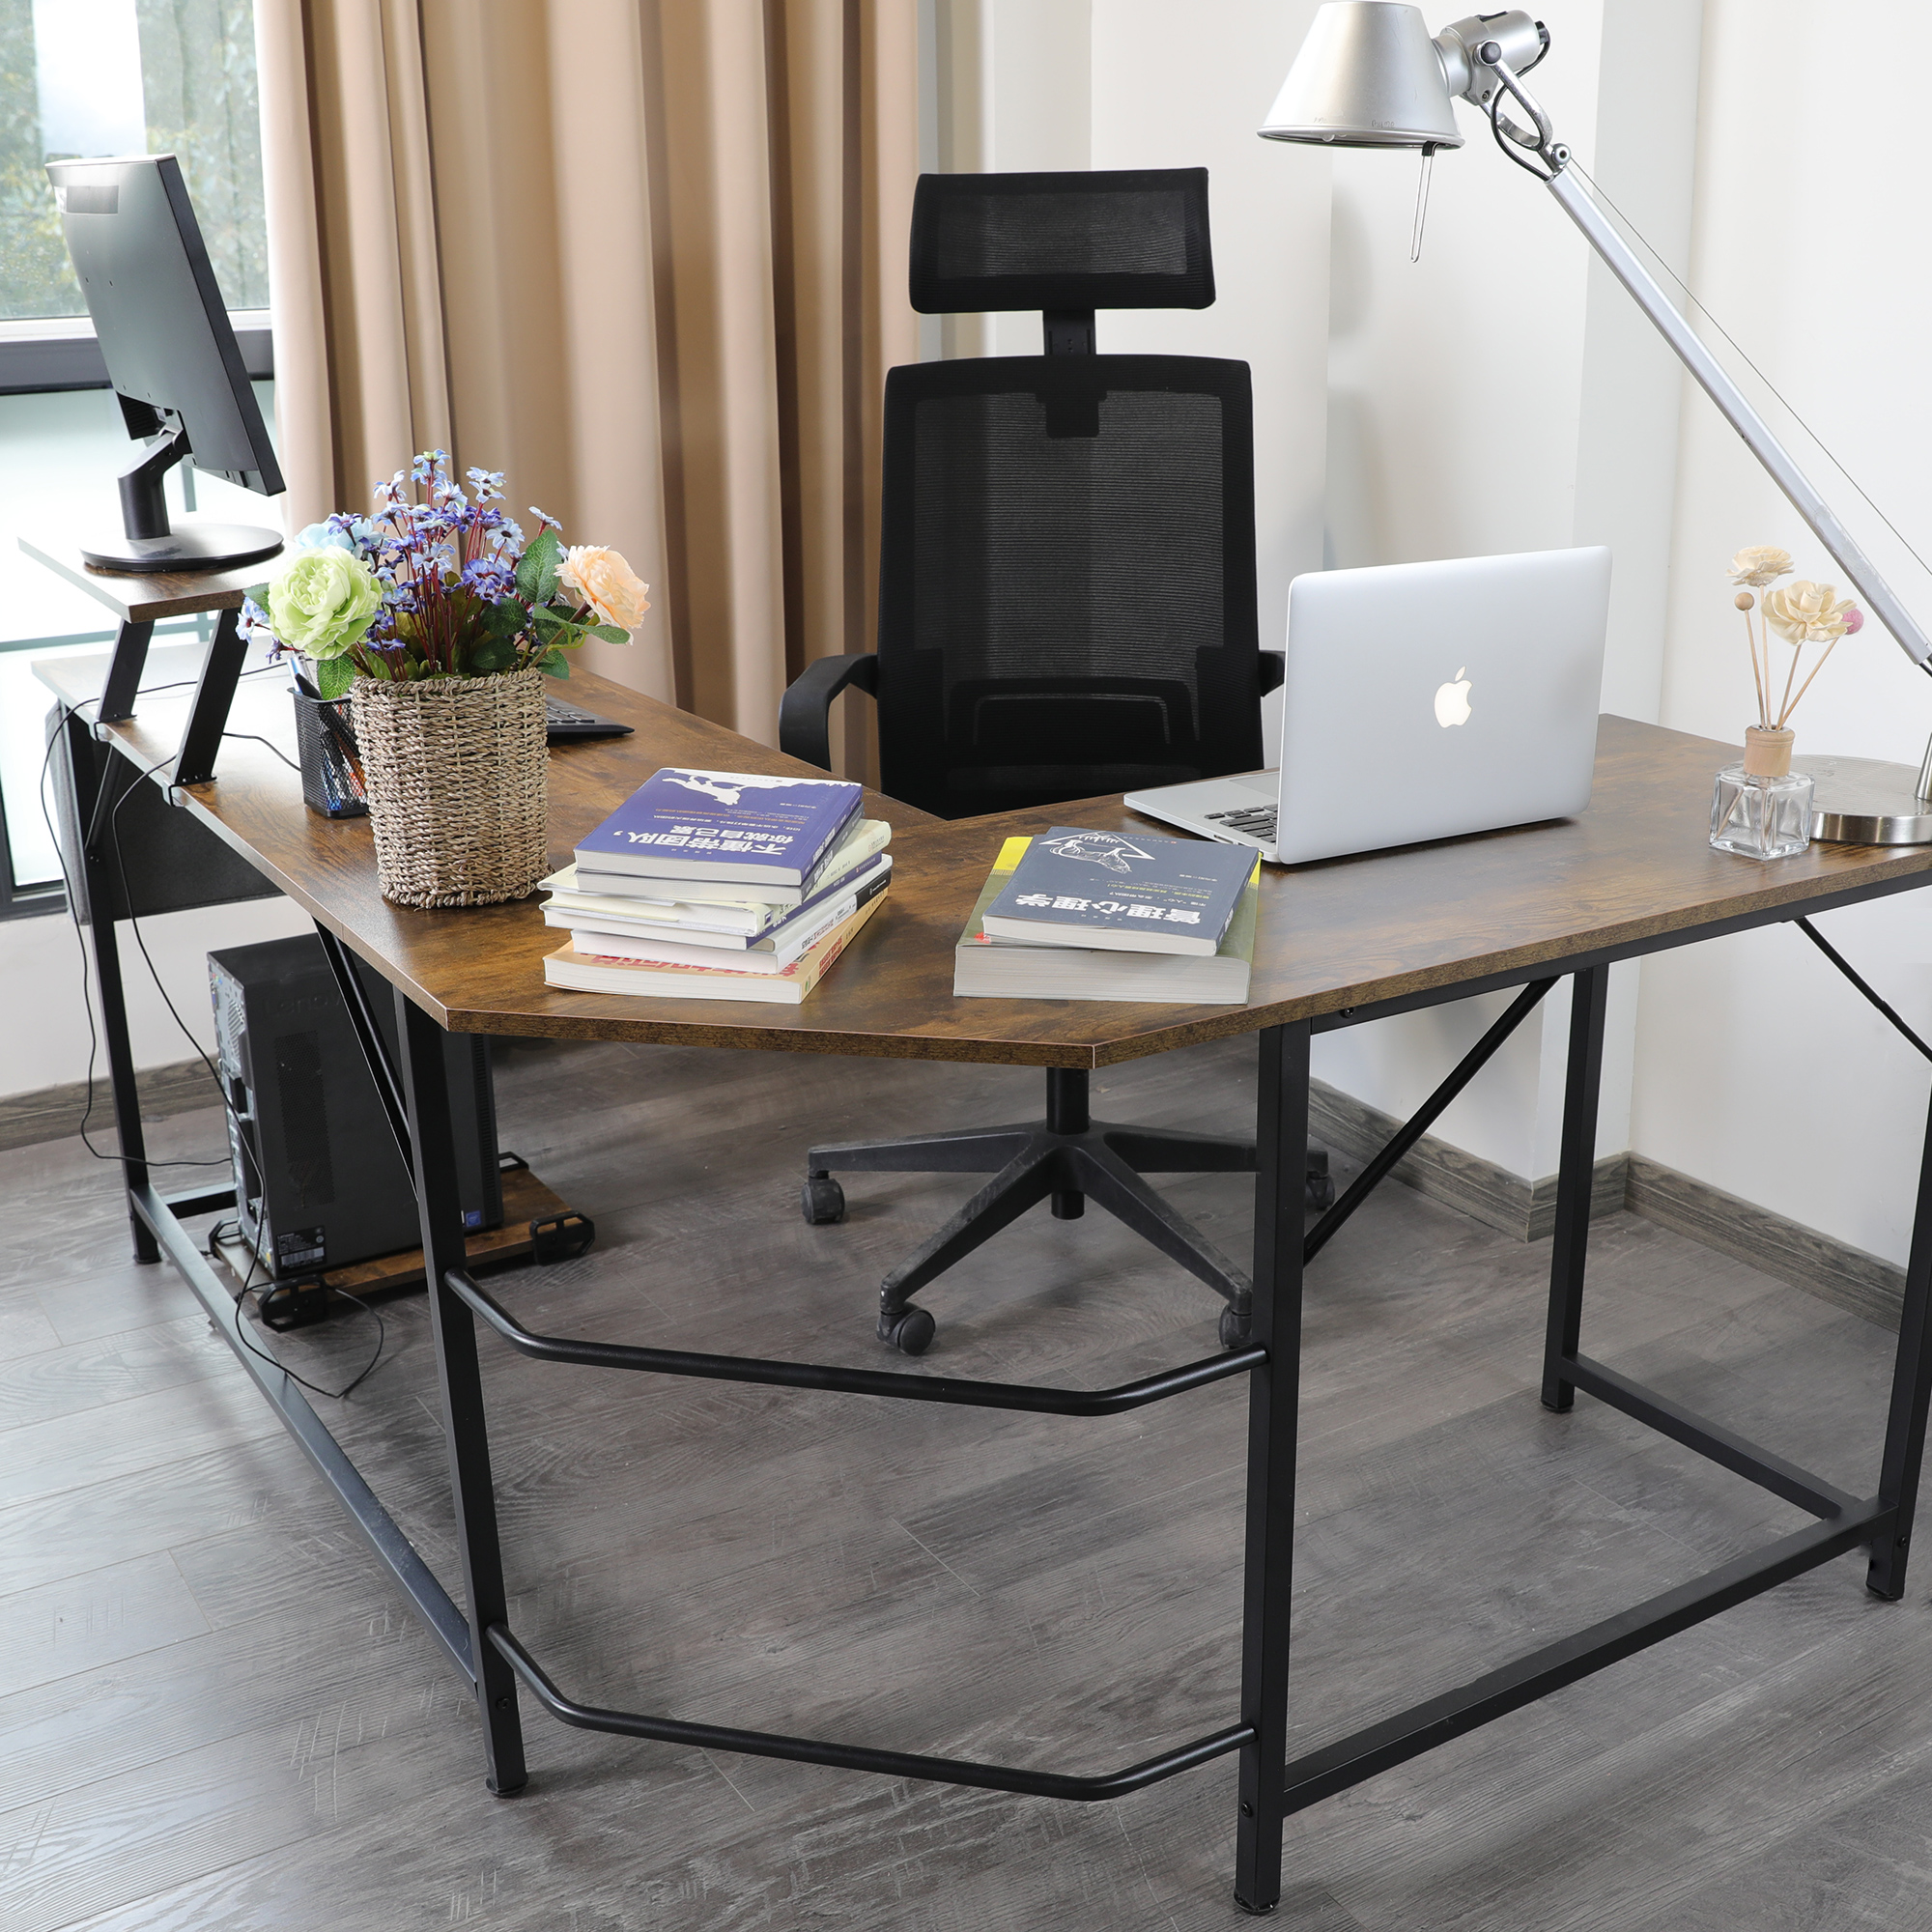 Details about   Home Office PC Corner Computer Desk Laptop Table Workstation Furniture Black 